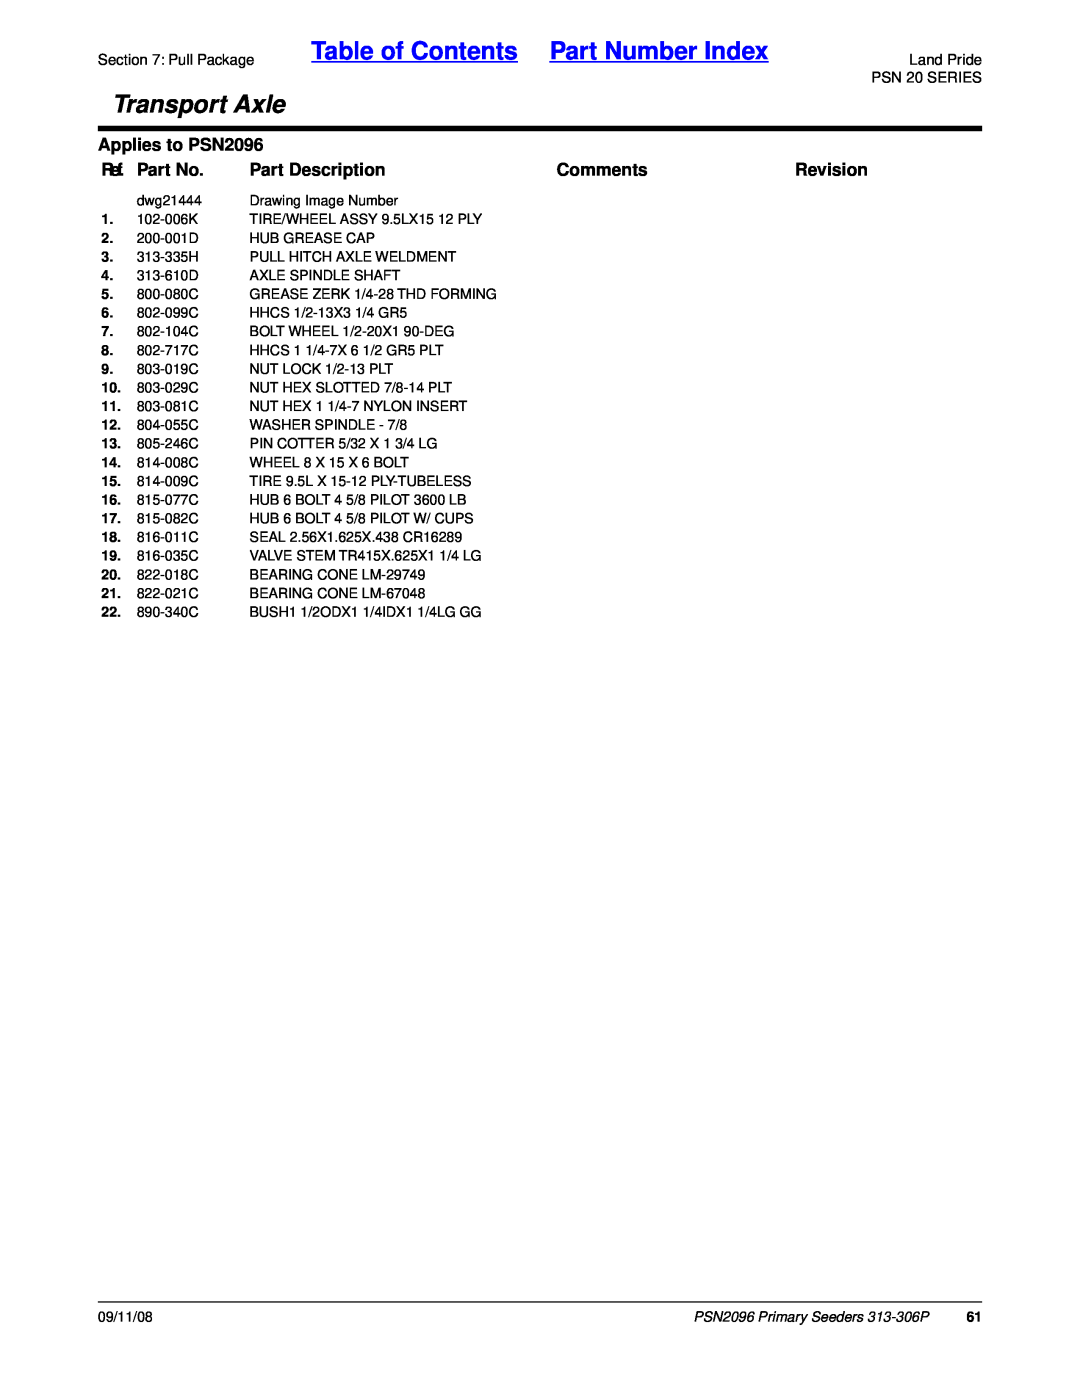 Land Pride 20583 Table of Contents Part Number Index, Transport Axle, Applies to PSN2096, Ref. Part No, Part Description 